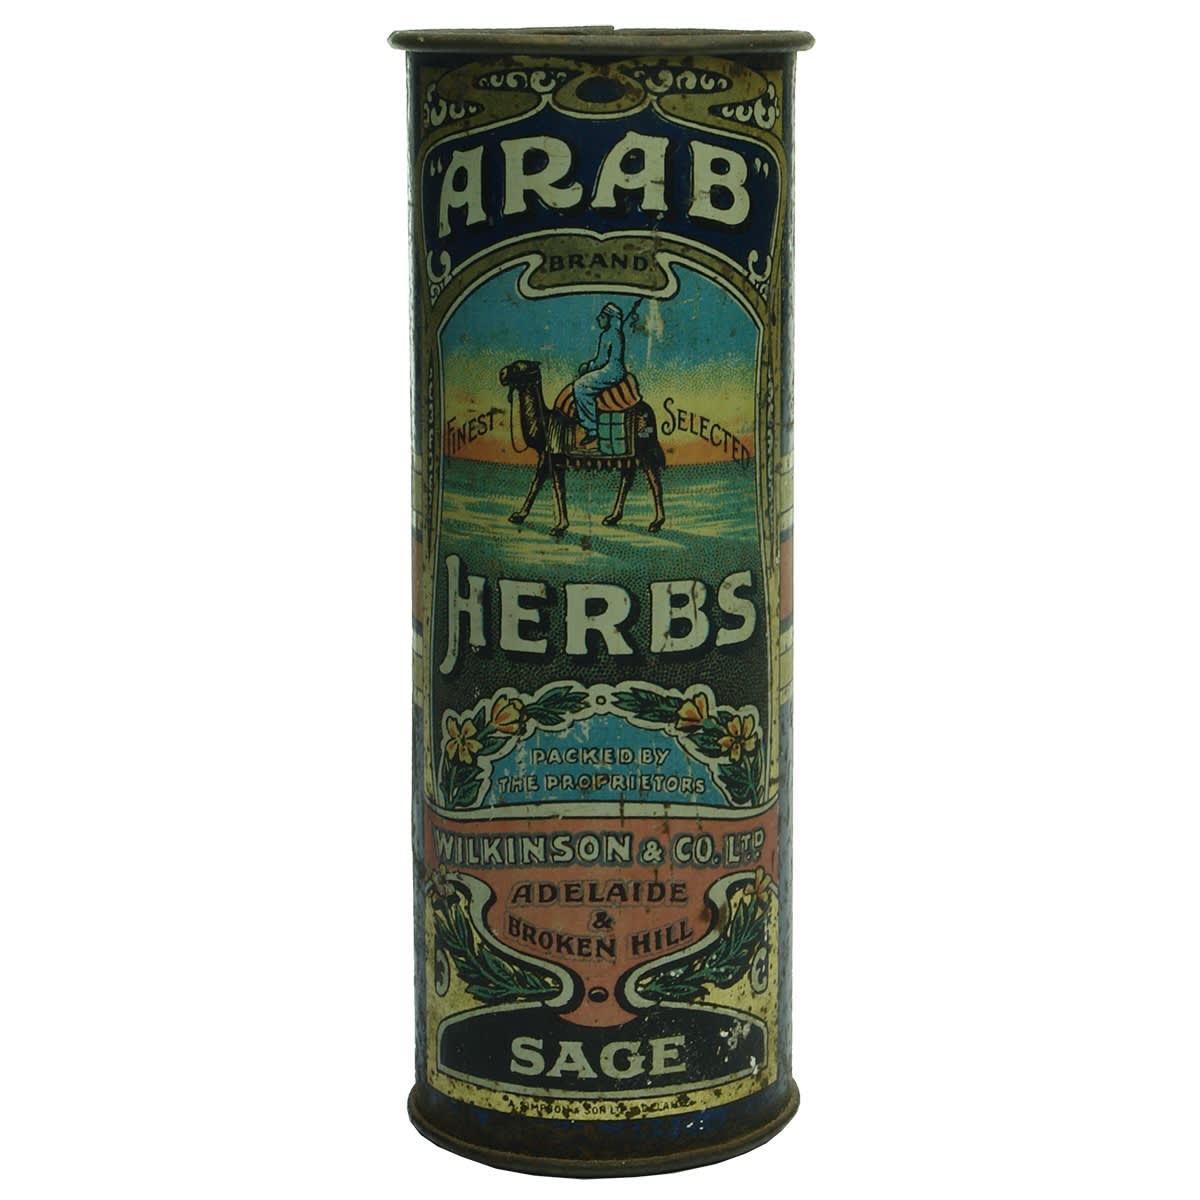 Tin. "Arab" Herbs, Wilkinson & Co. Ltd., Adelaide & Broken Hill. Sage. 1/2 Pint. (South Australia, New South Wales)